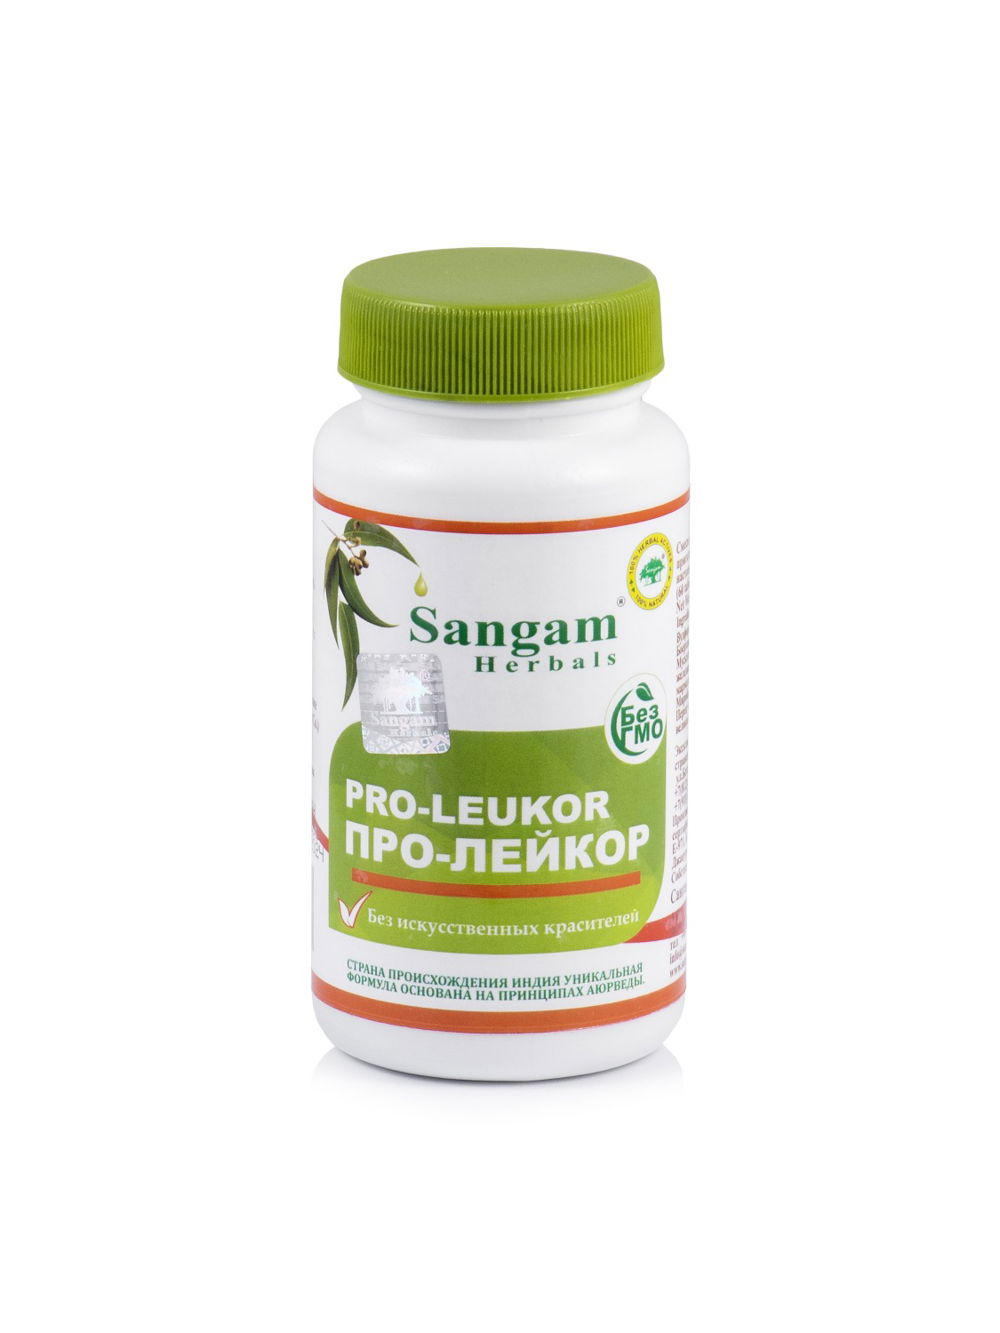 Про-Лейкор Sangam Herbals (60 таблеток), Про-Лейкор Sangam Herbals